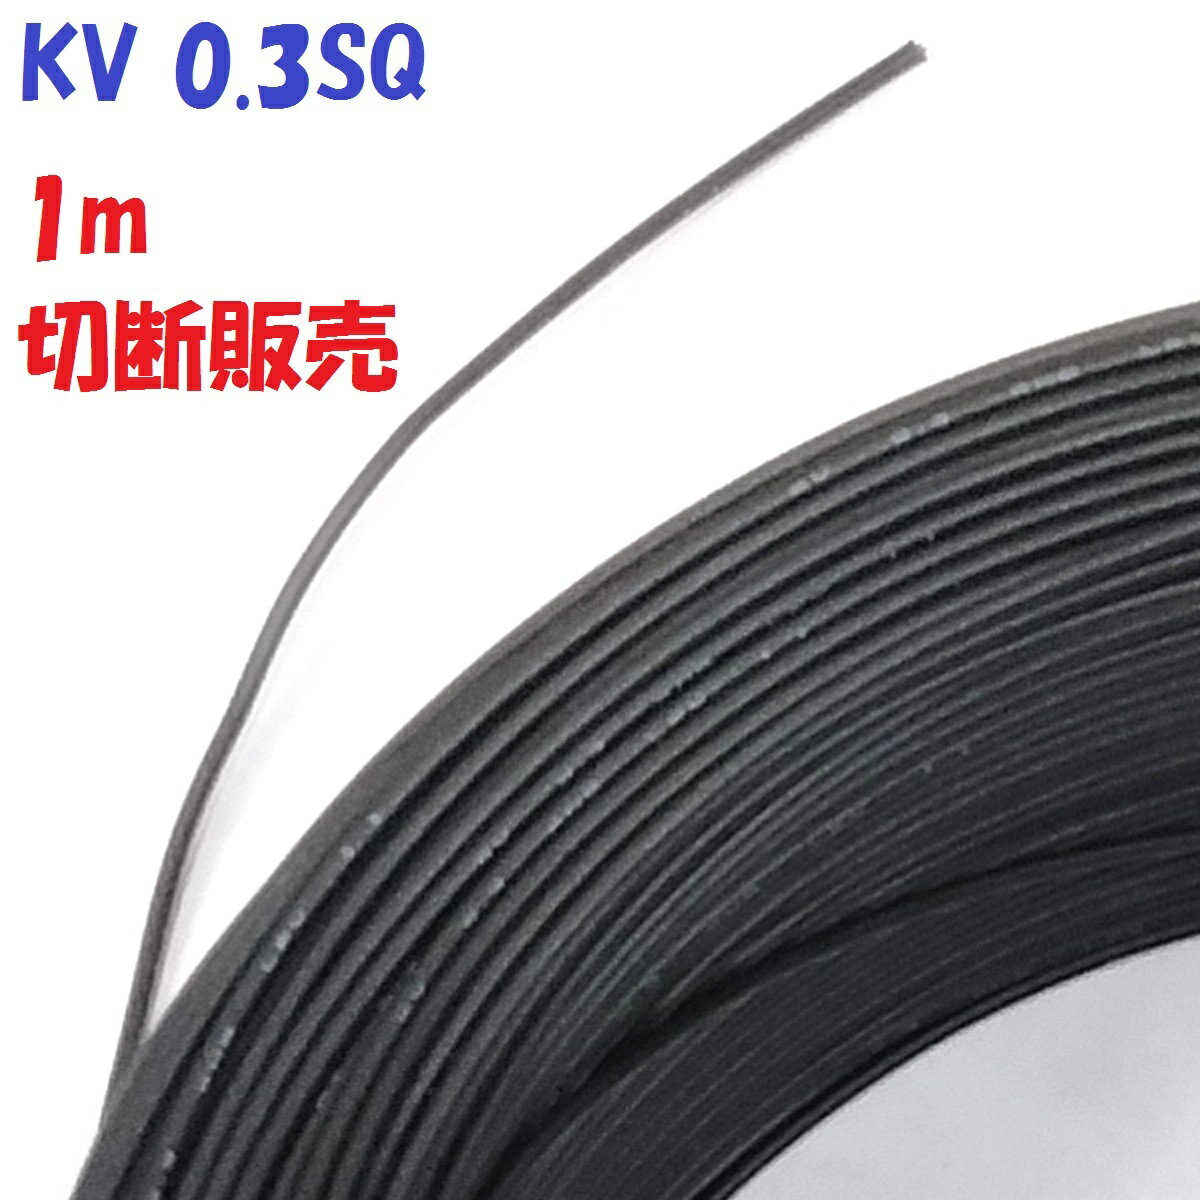 KV 0.3SQ 黒色【1m 切断販売】KHD 電子